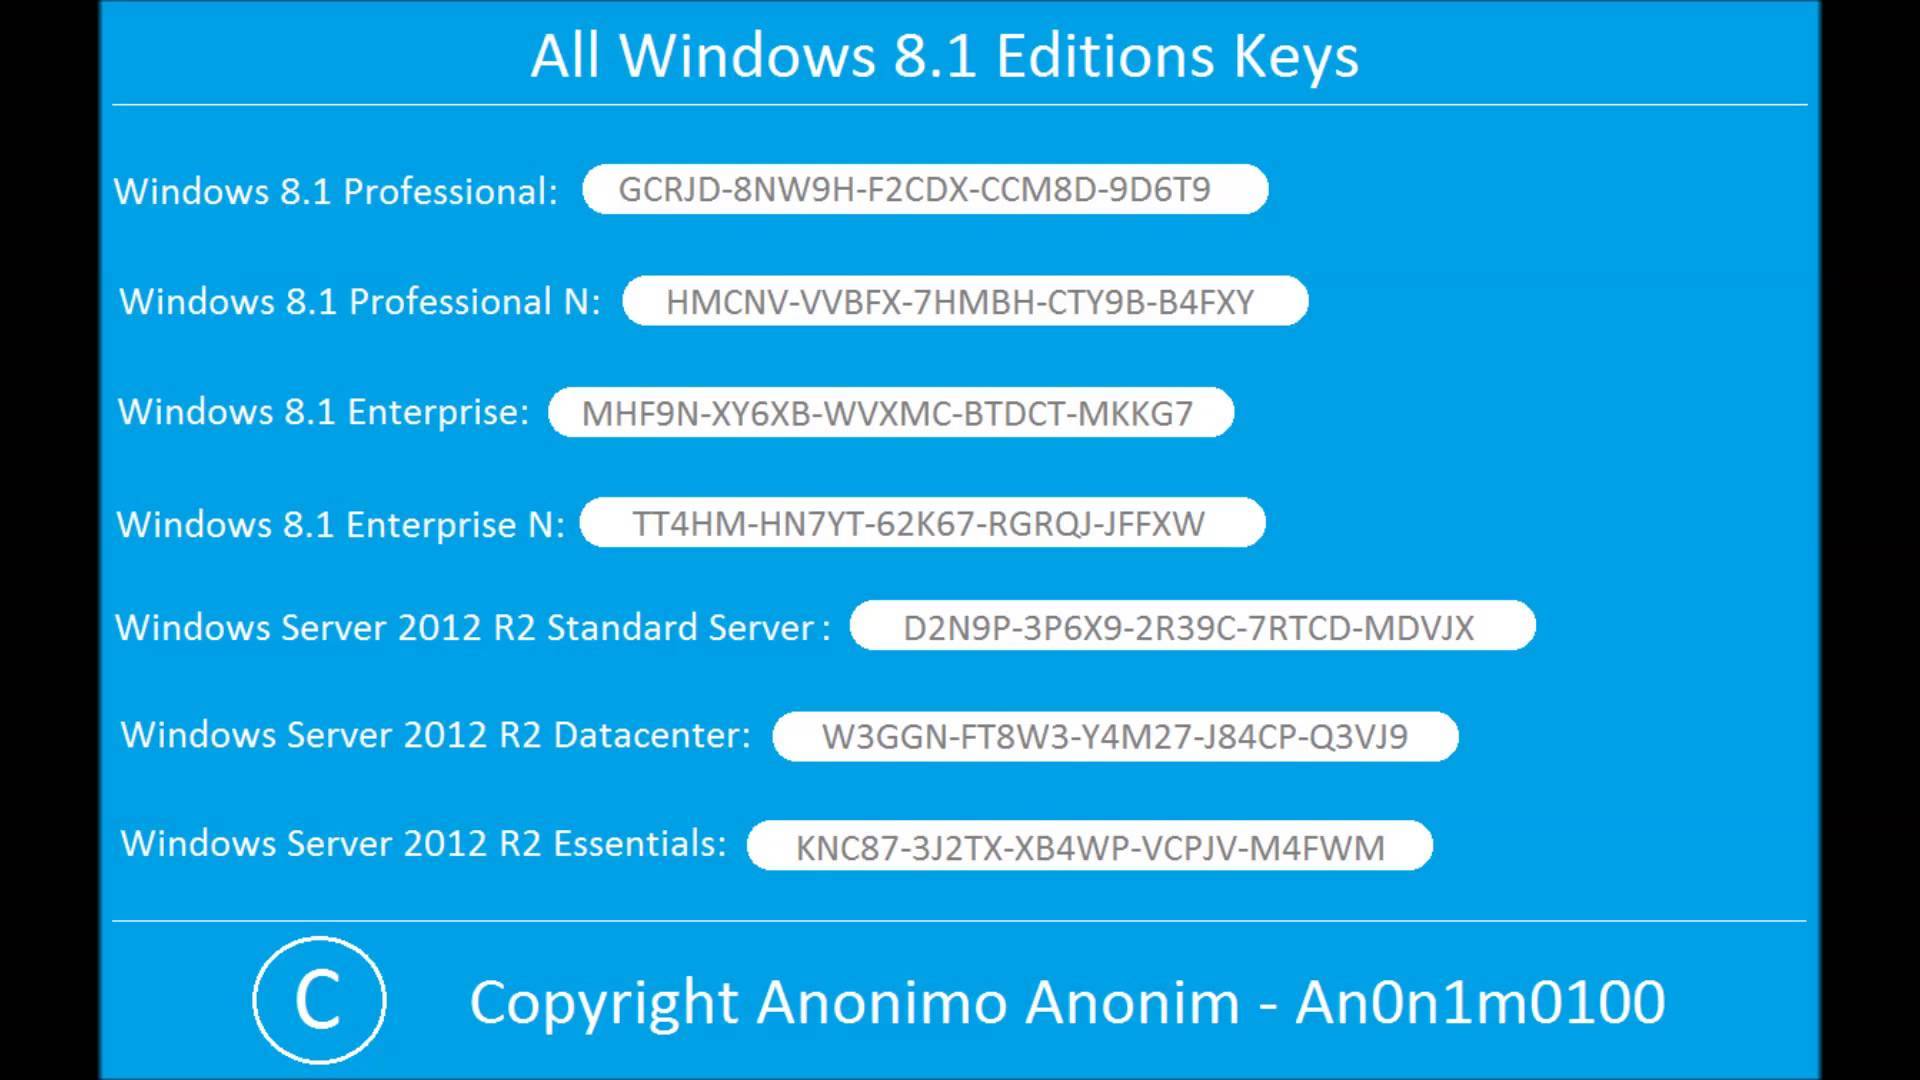 Windows 7 home basic 64 bit activation key generator